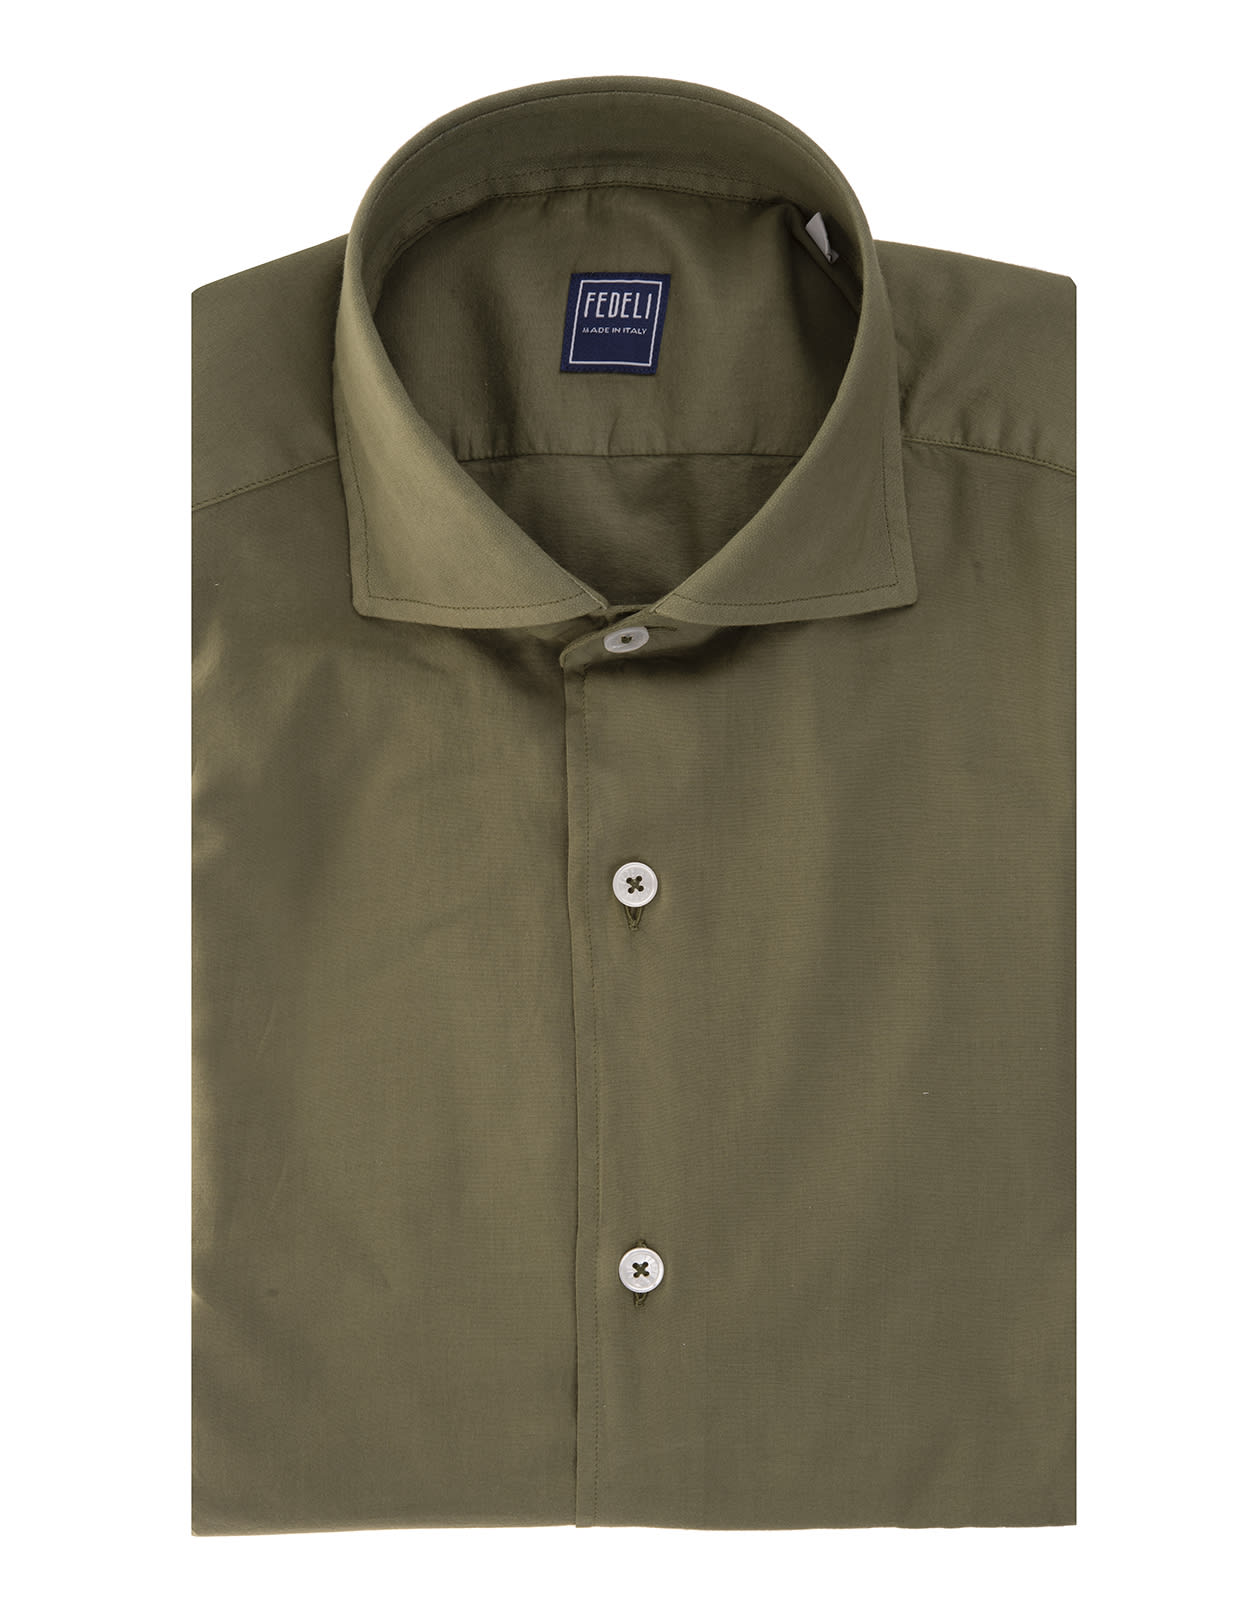 Fedeli Man Olive Green Lightweight Cotton Shirt